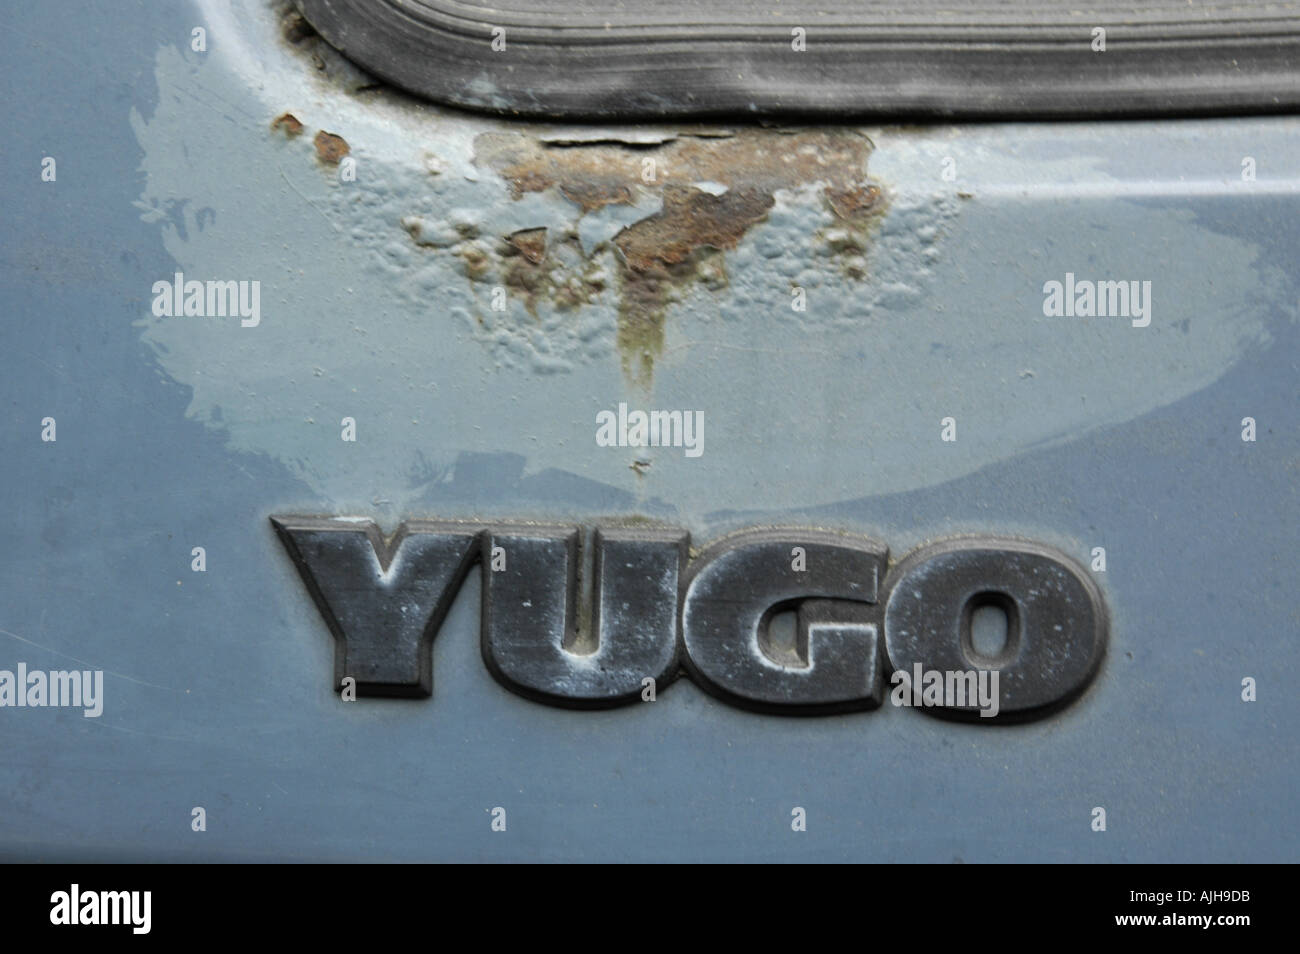 car brand Yugo, rusty Stock Photo